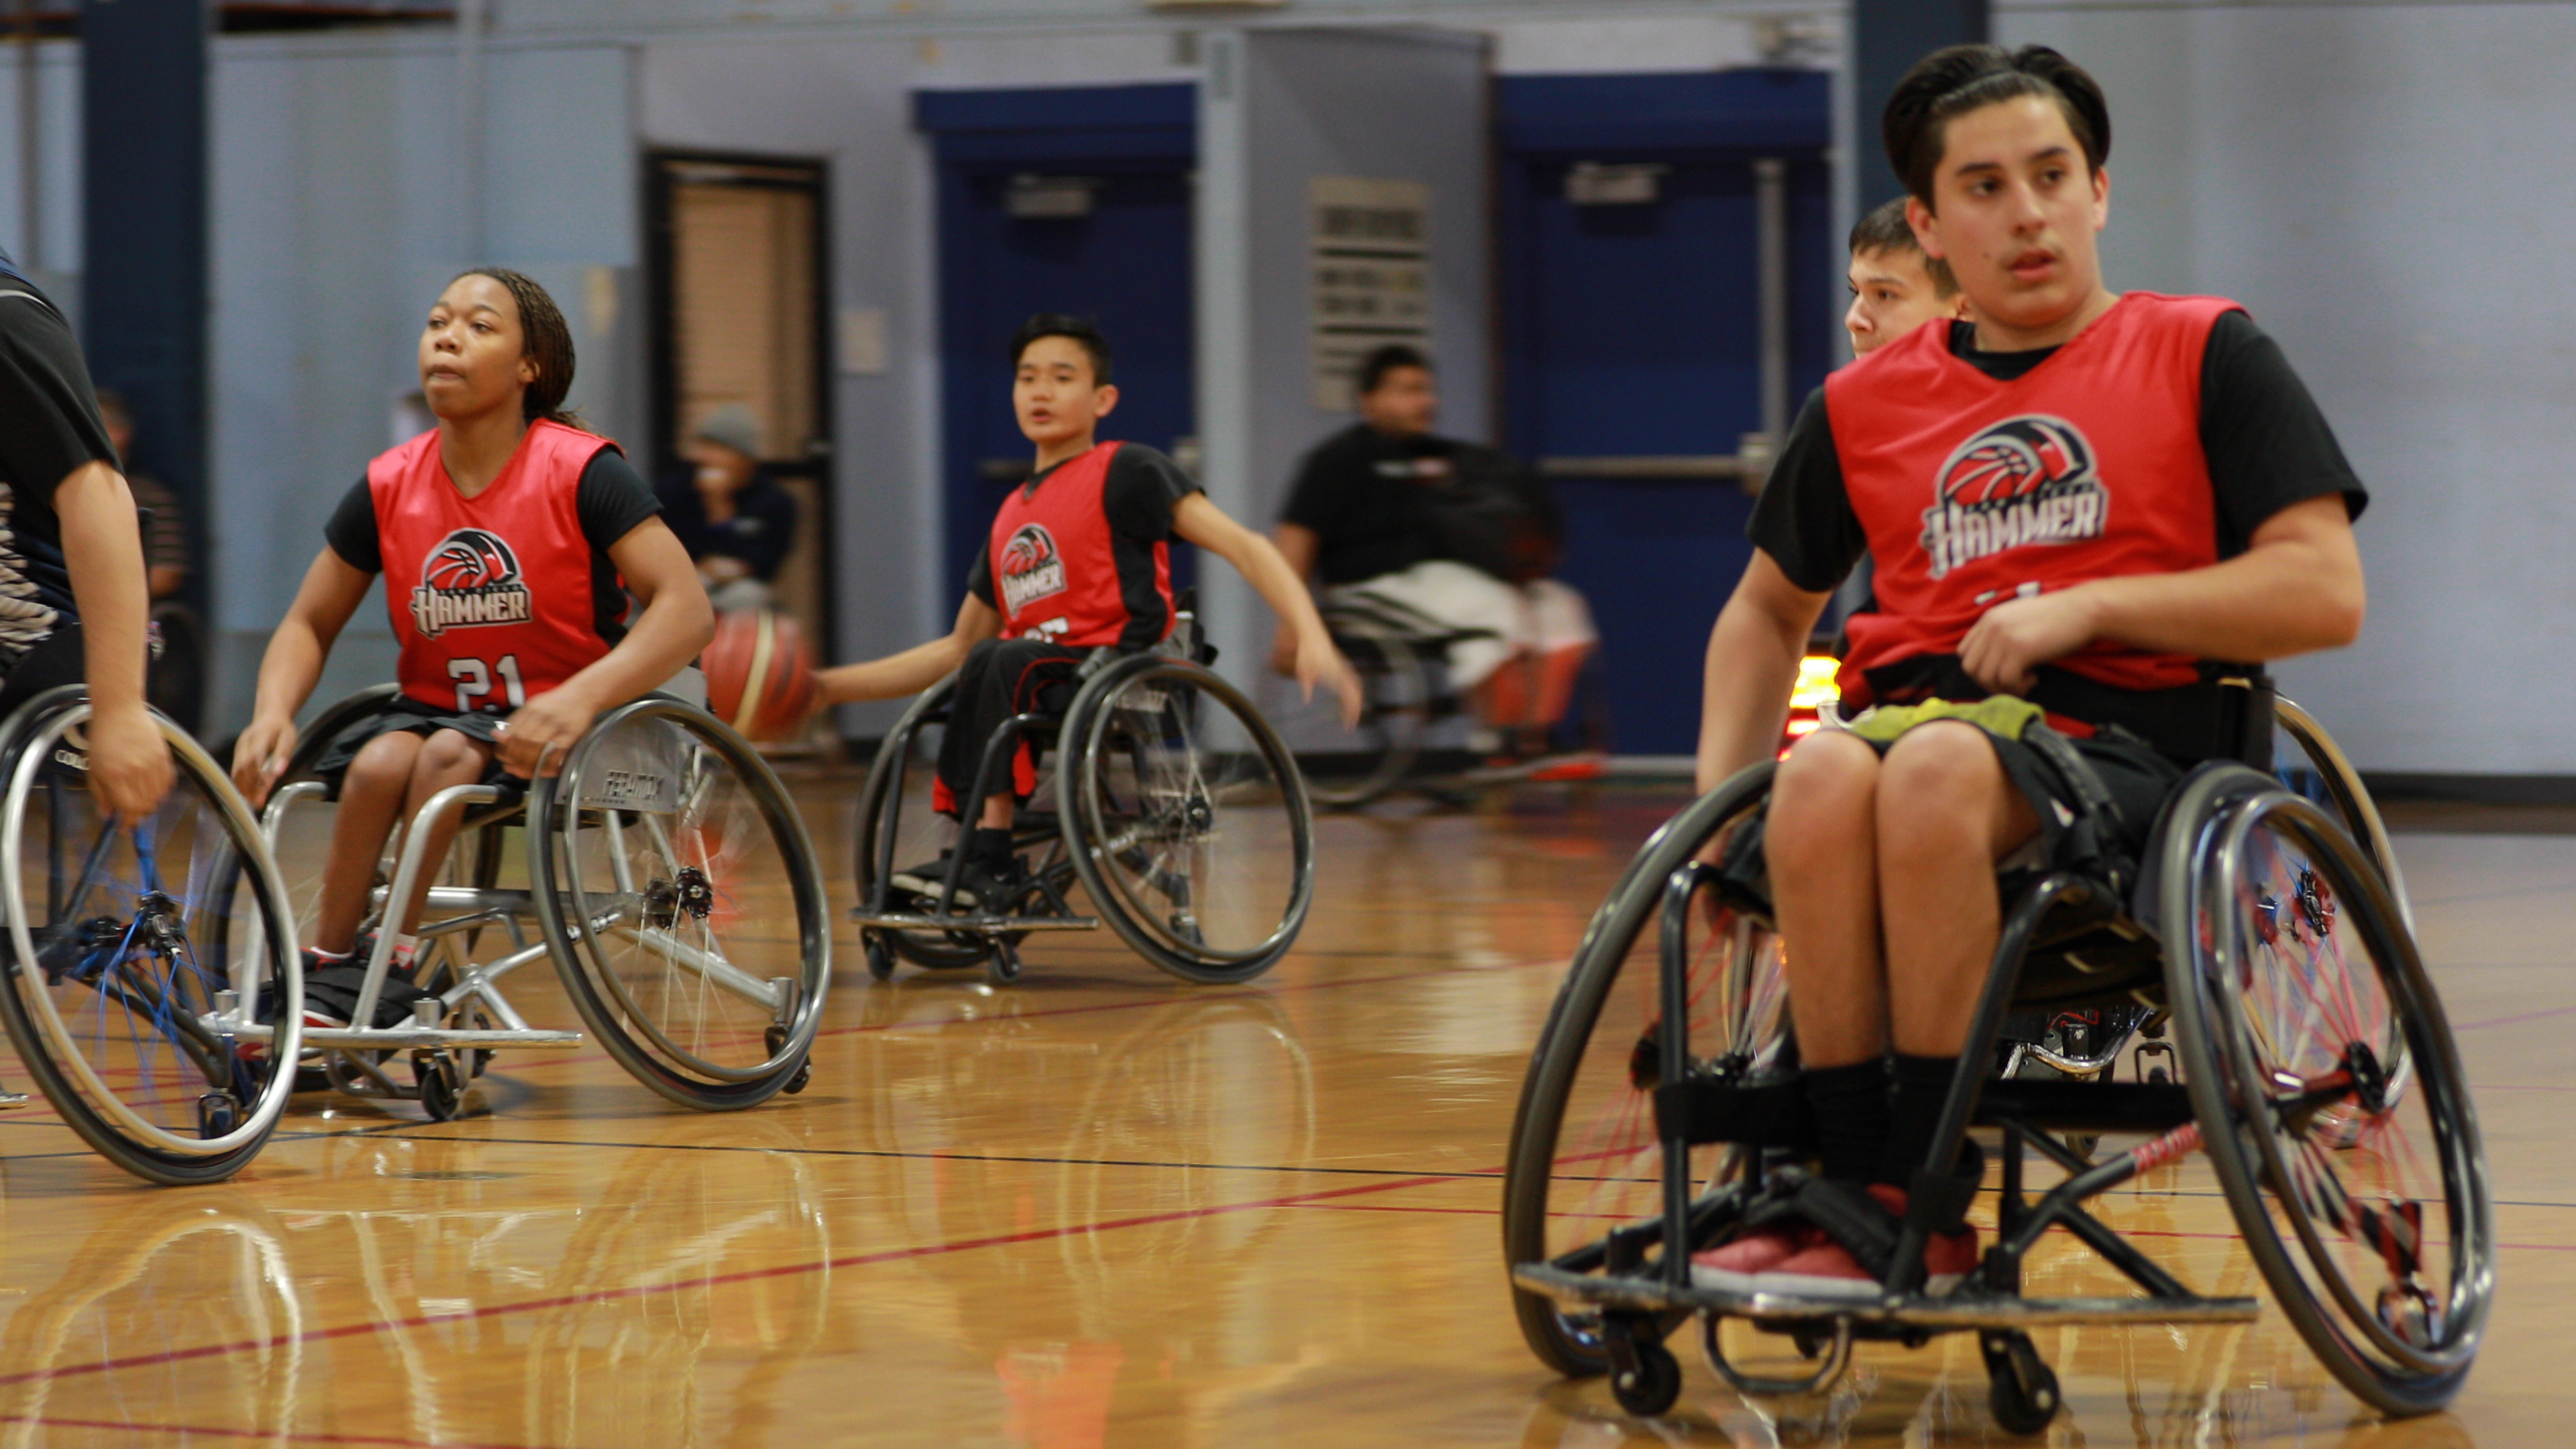 Danny playing wheelchair basketball.